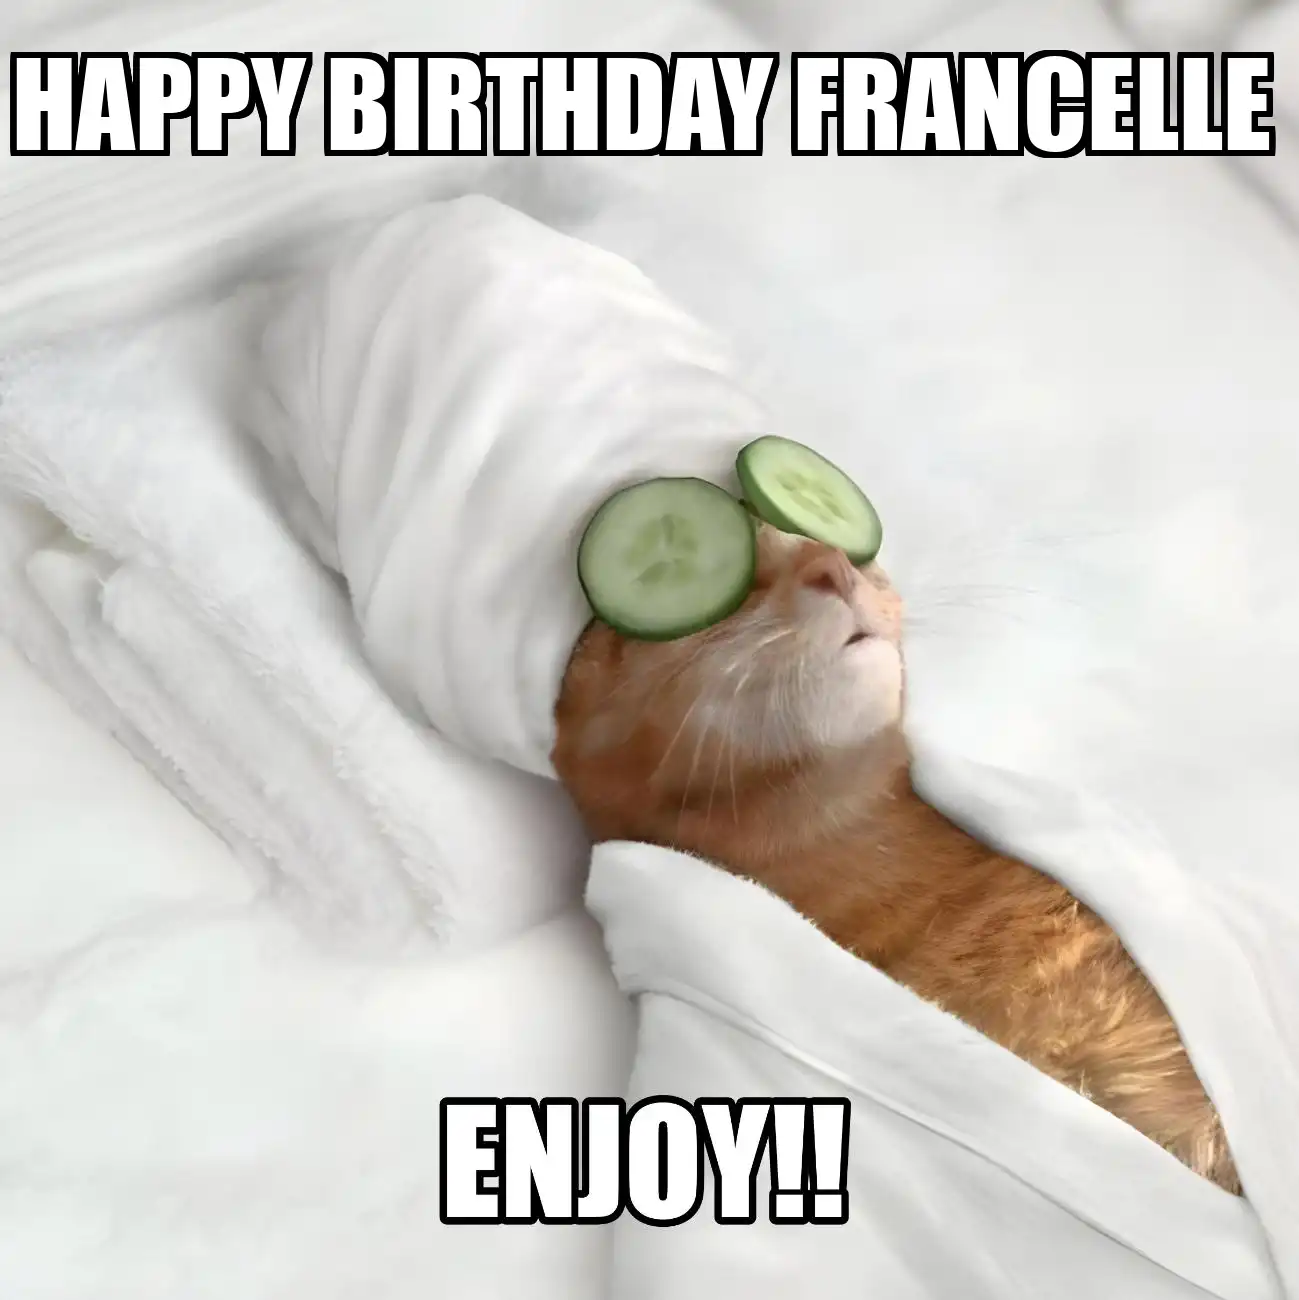 Happy Birthday Francelle Enjoy Cat Meme